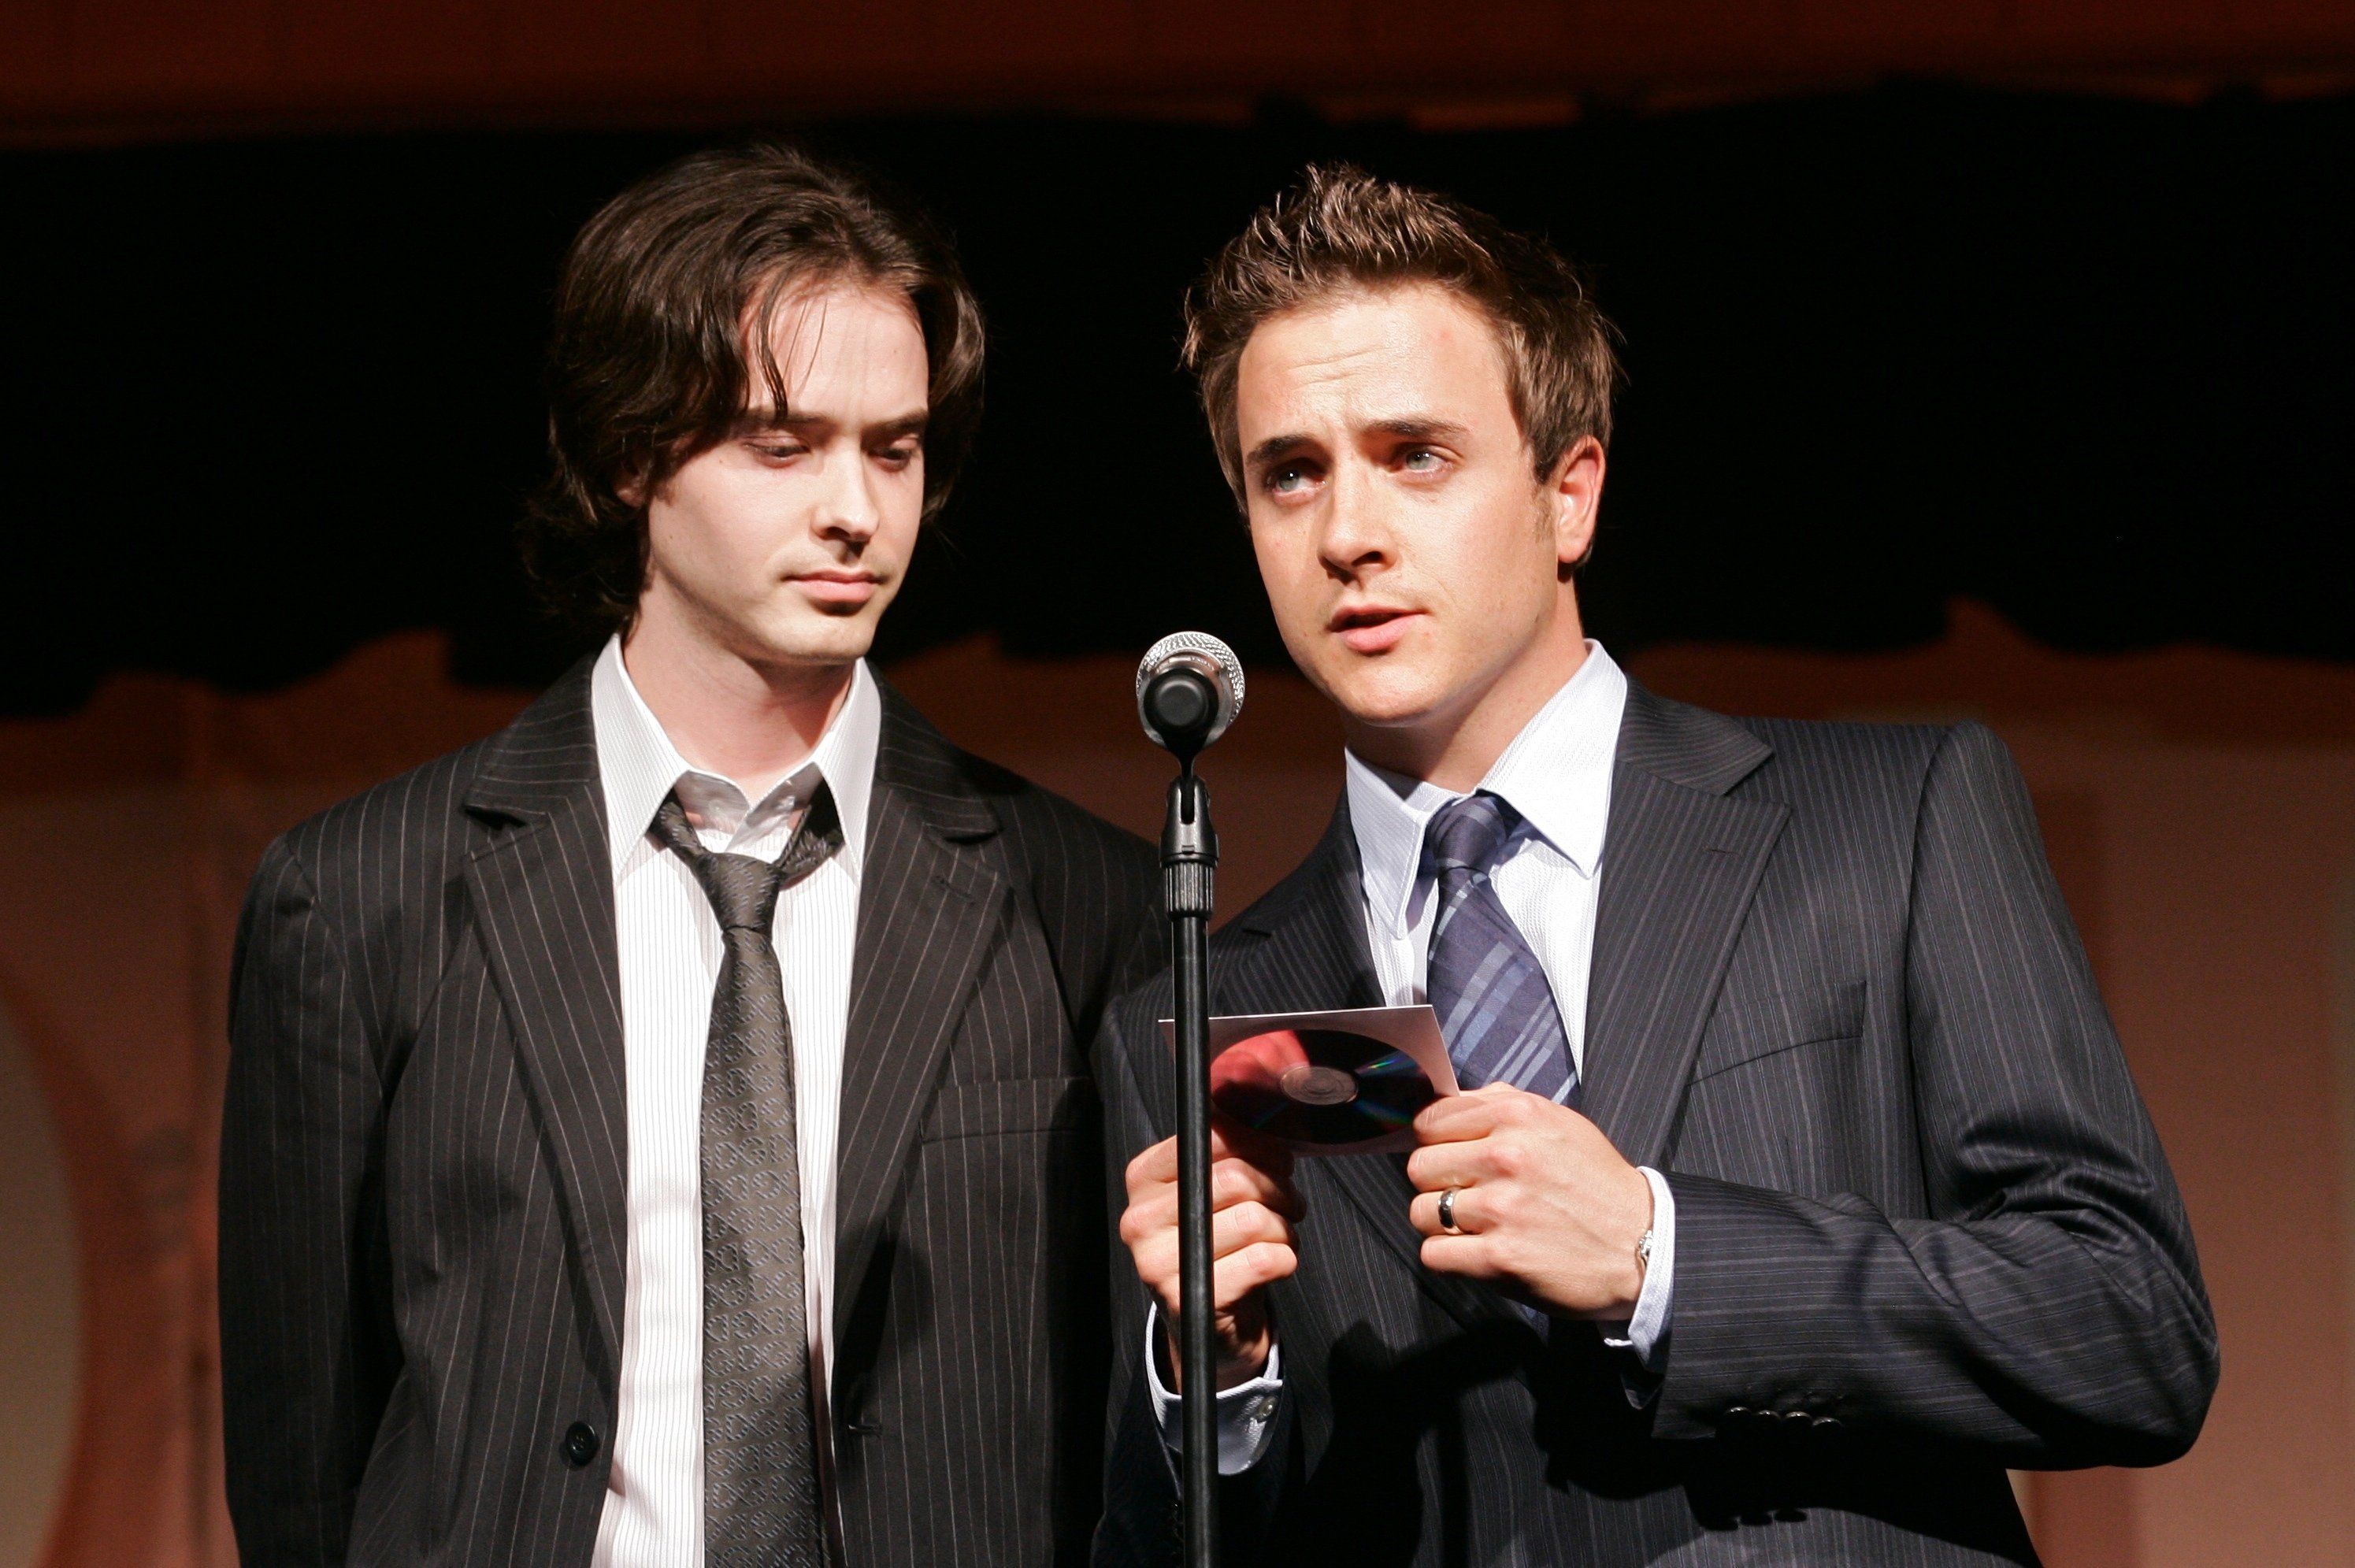 Ryan Kennedy & David Kopp at the 2008 Leo Awards